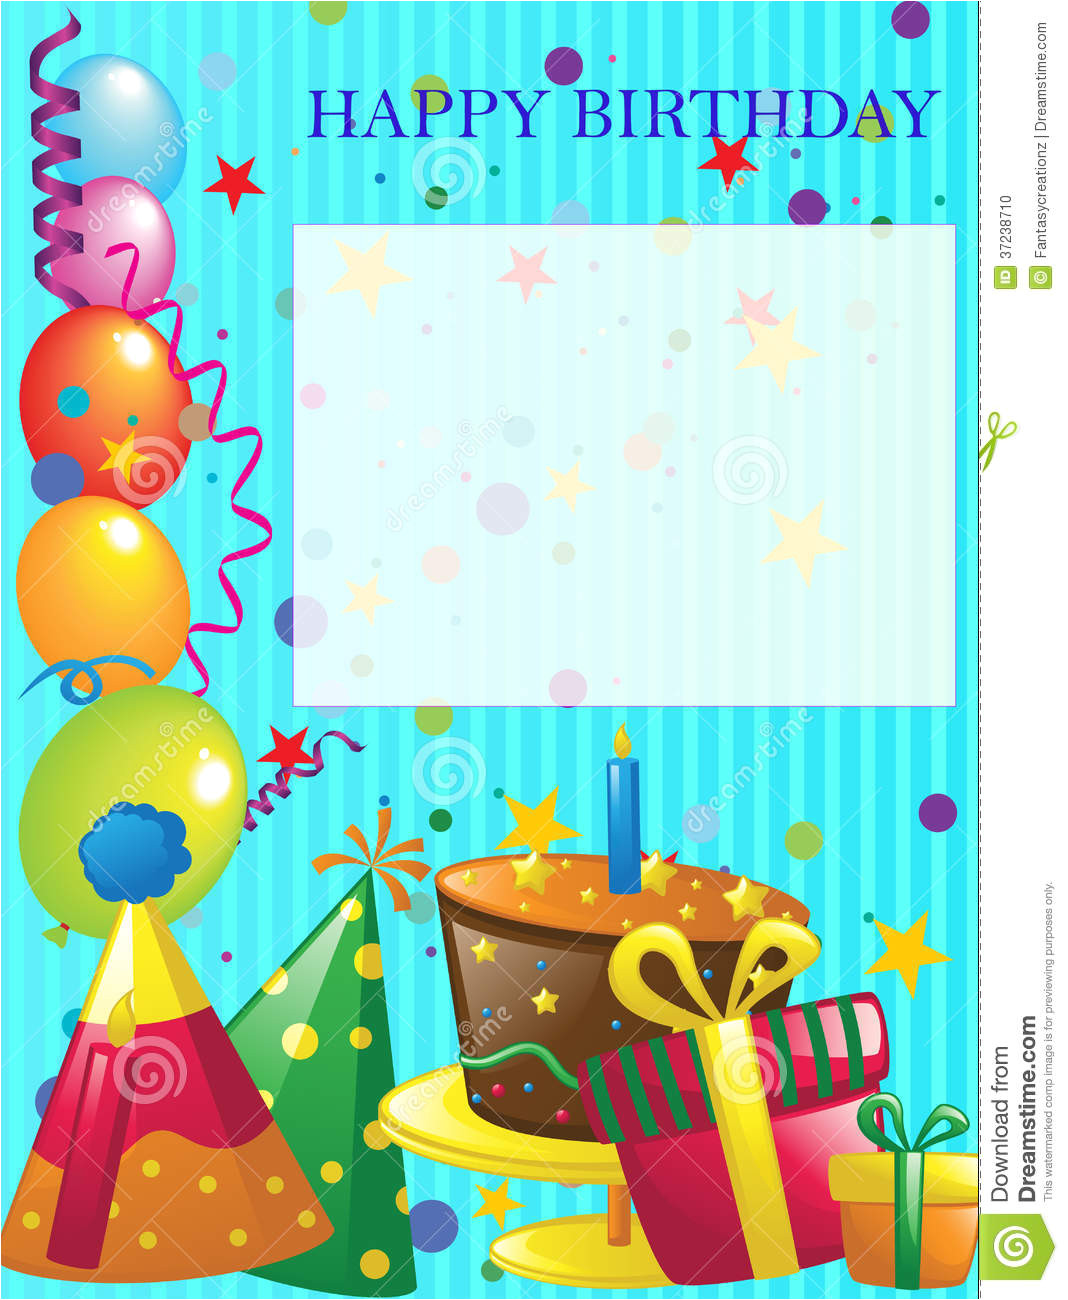 stock photo happy birthday background invitation design image37238710